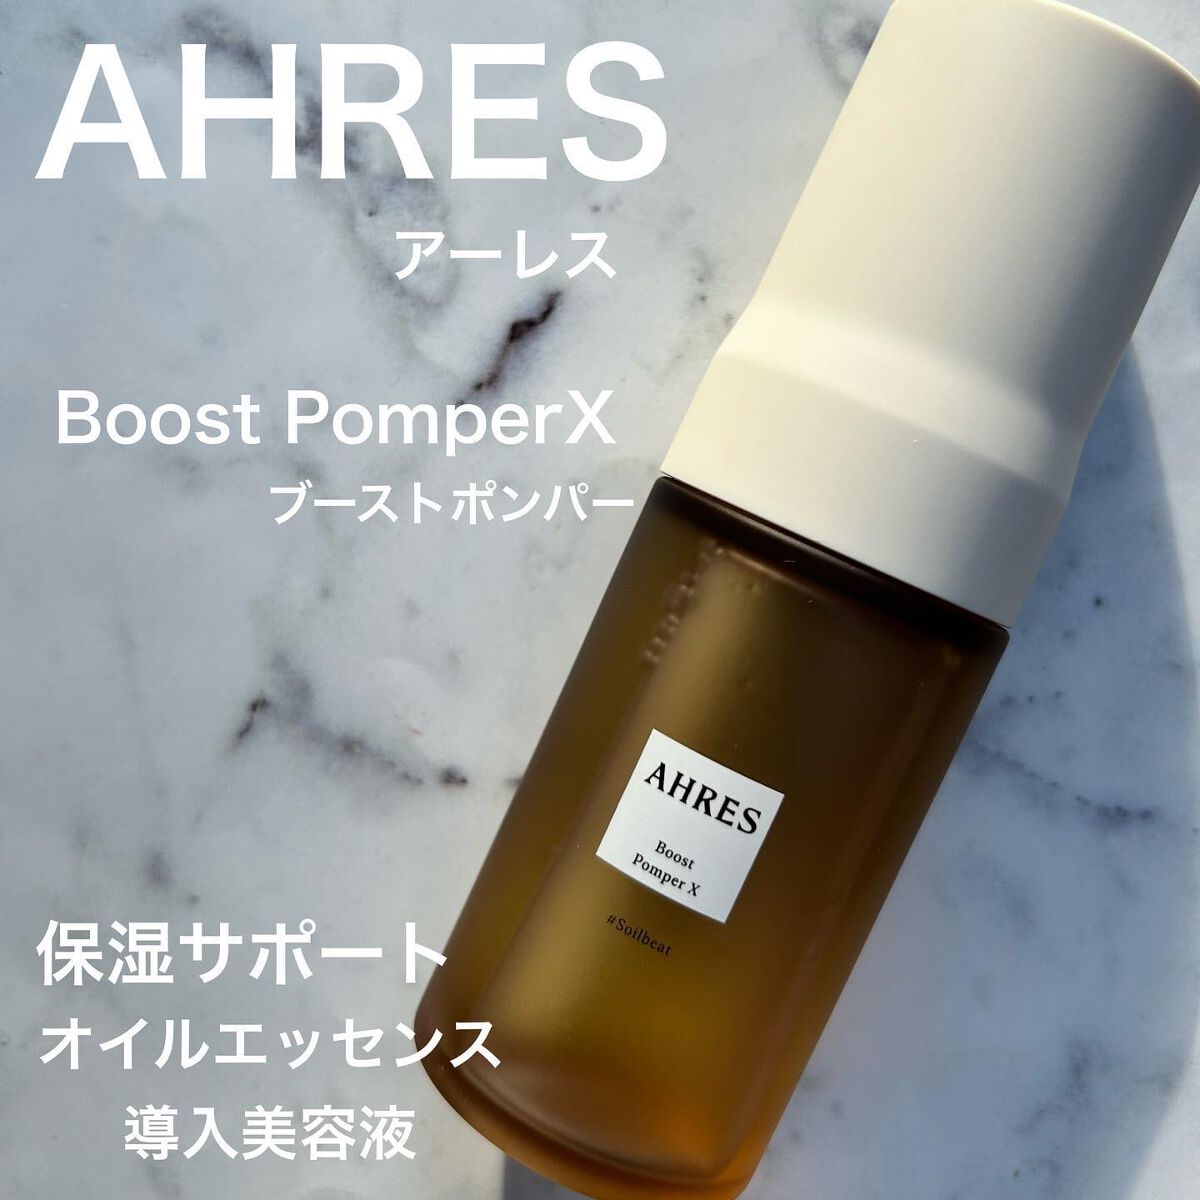 AHRES ブースト ポンパーX - ブースター・導入液